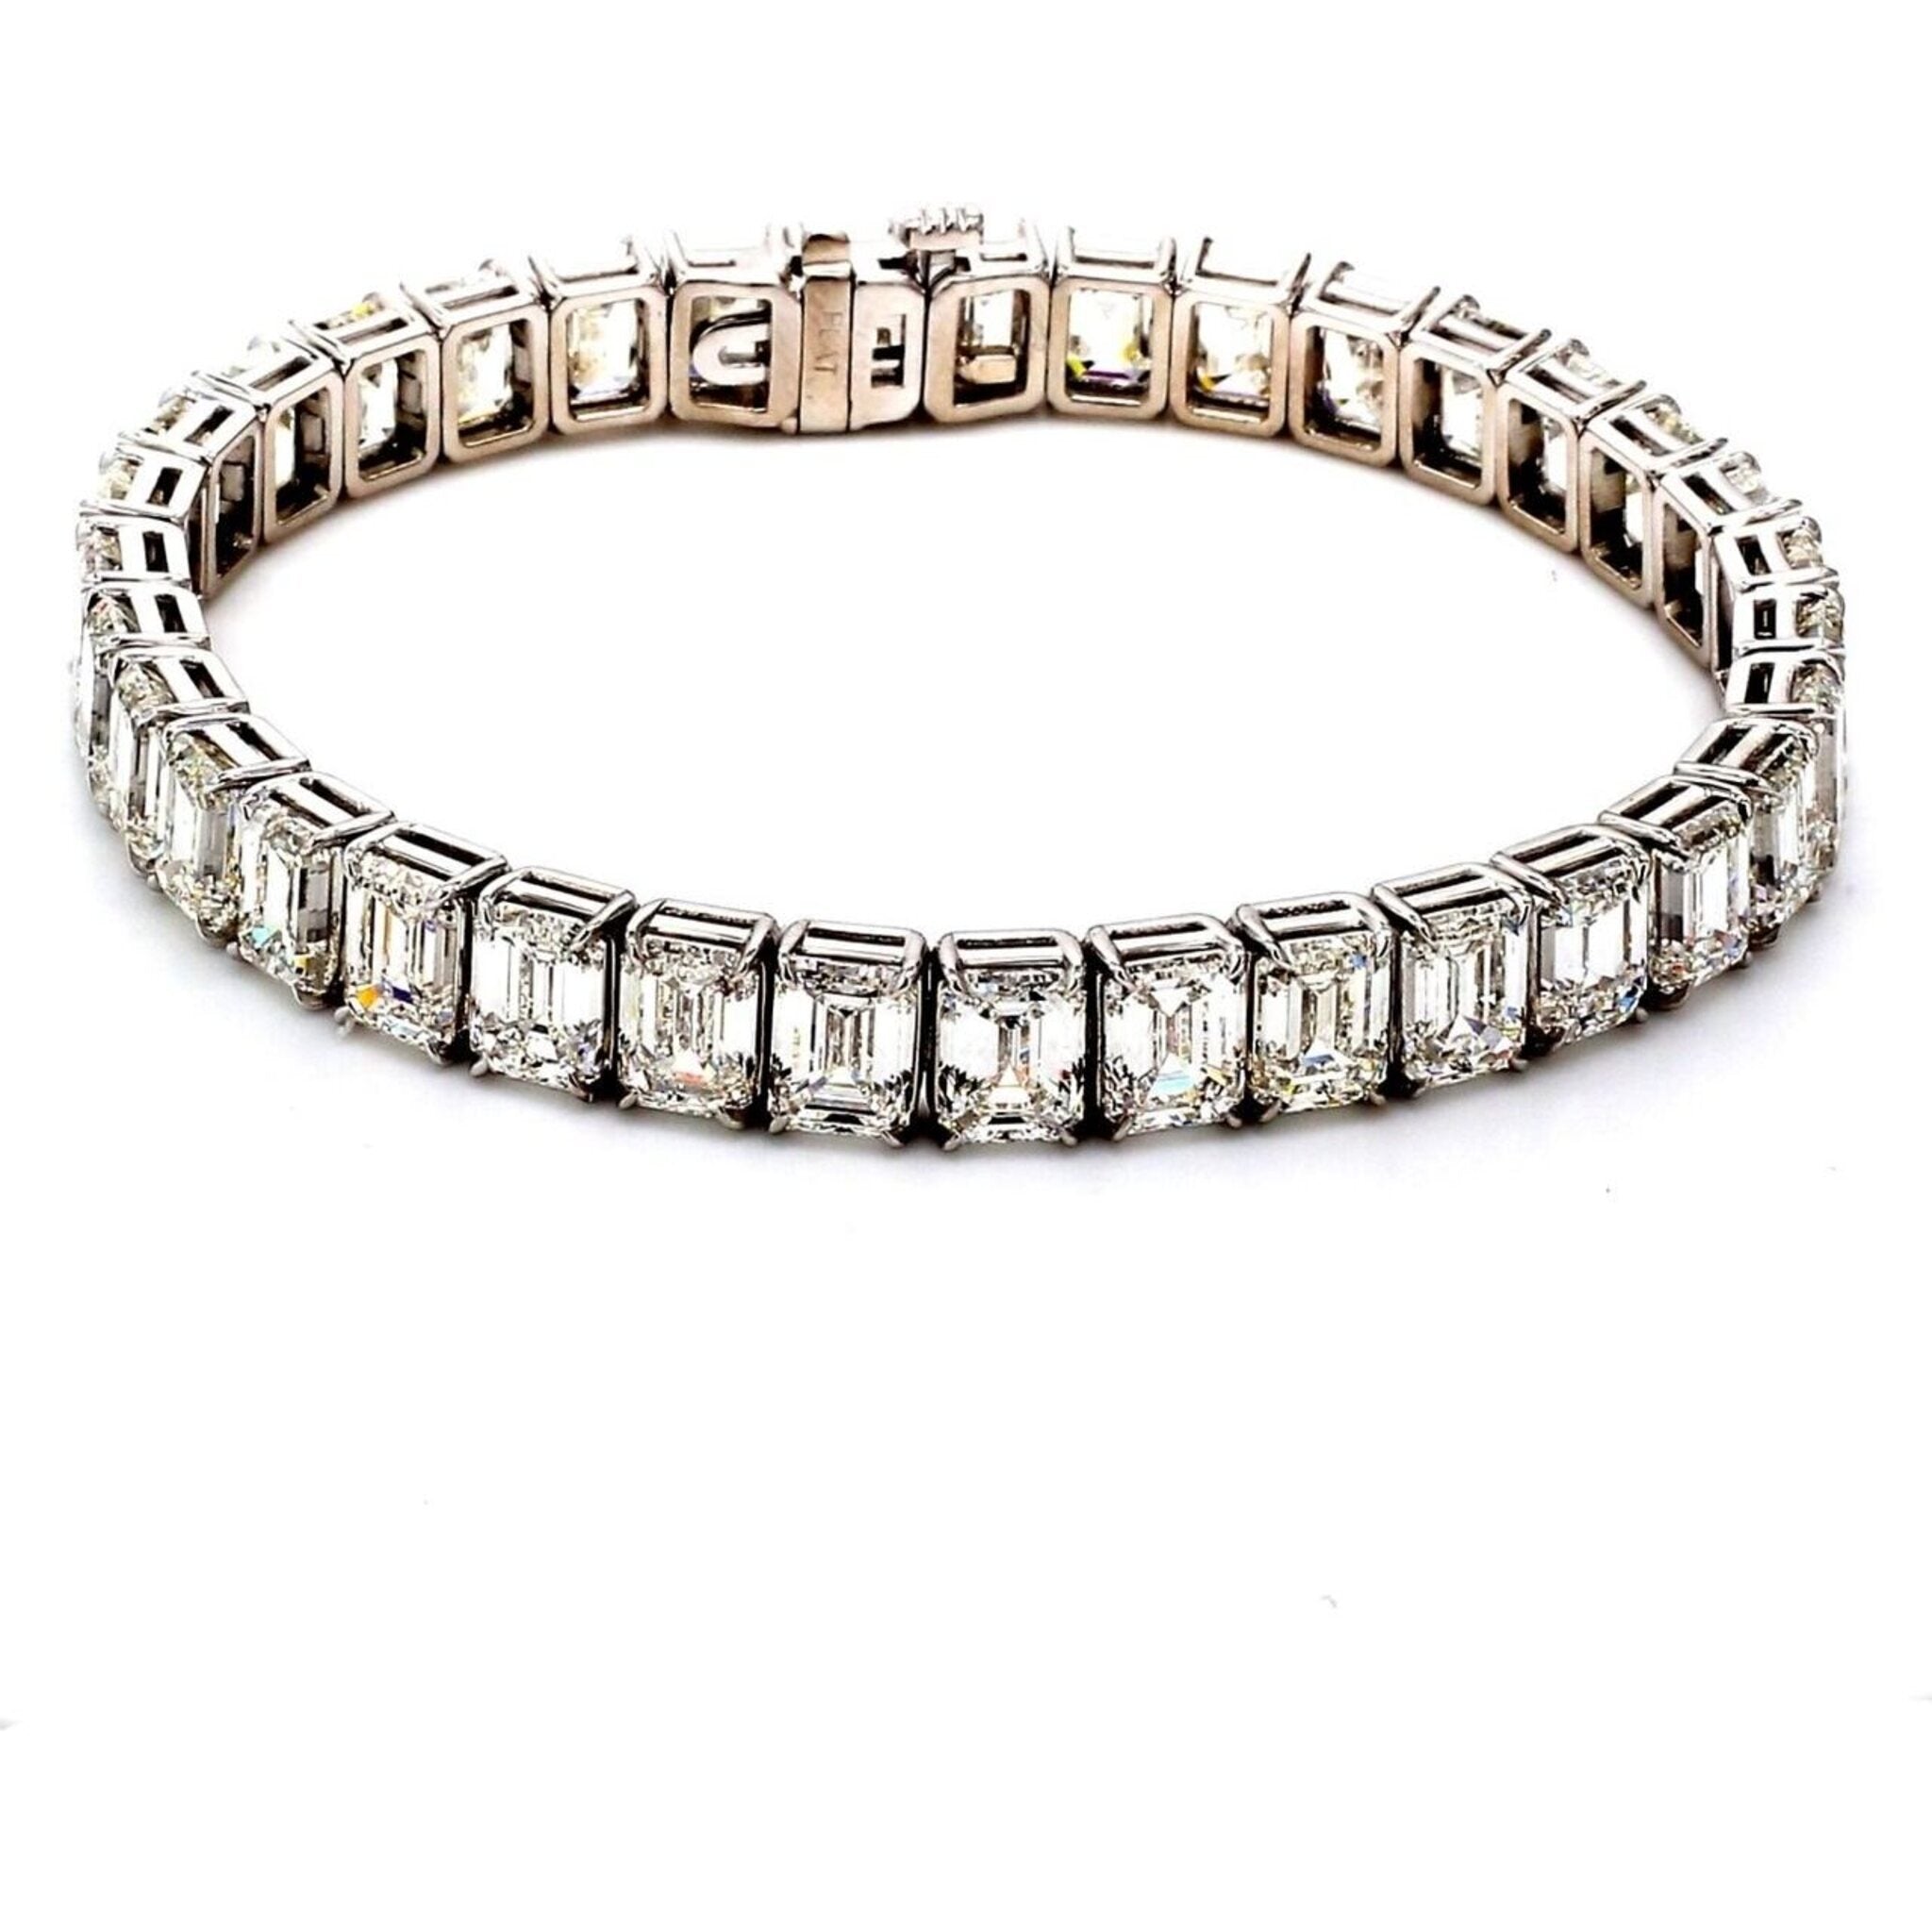 10 Carat Diamond Tennis Bracelet in Gold or Platinum – deBebians